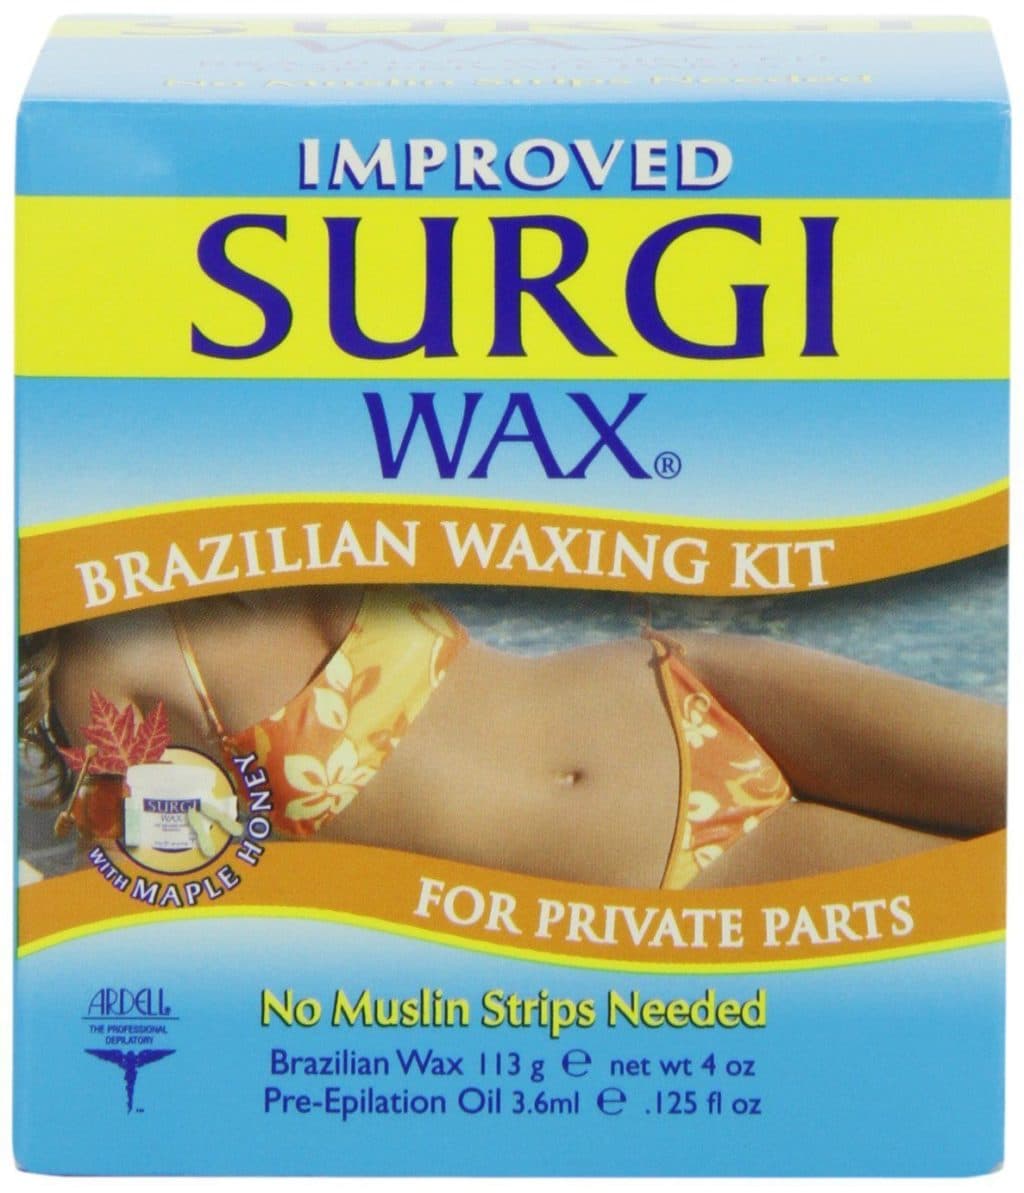 Surgi Wax Brazillian Waxing Kit